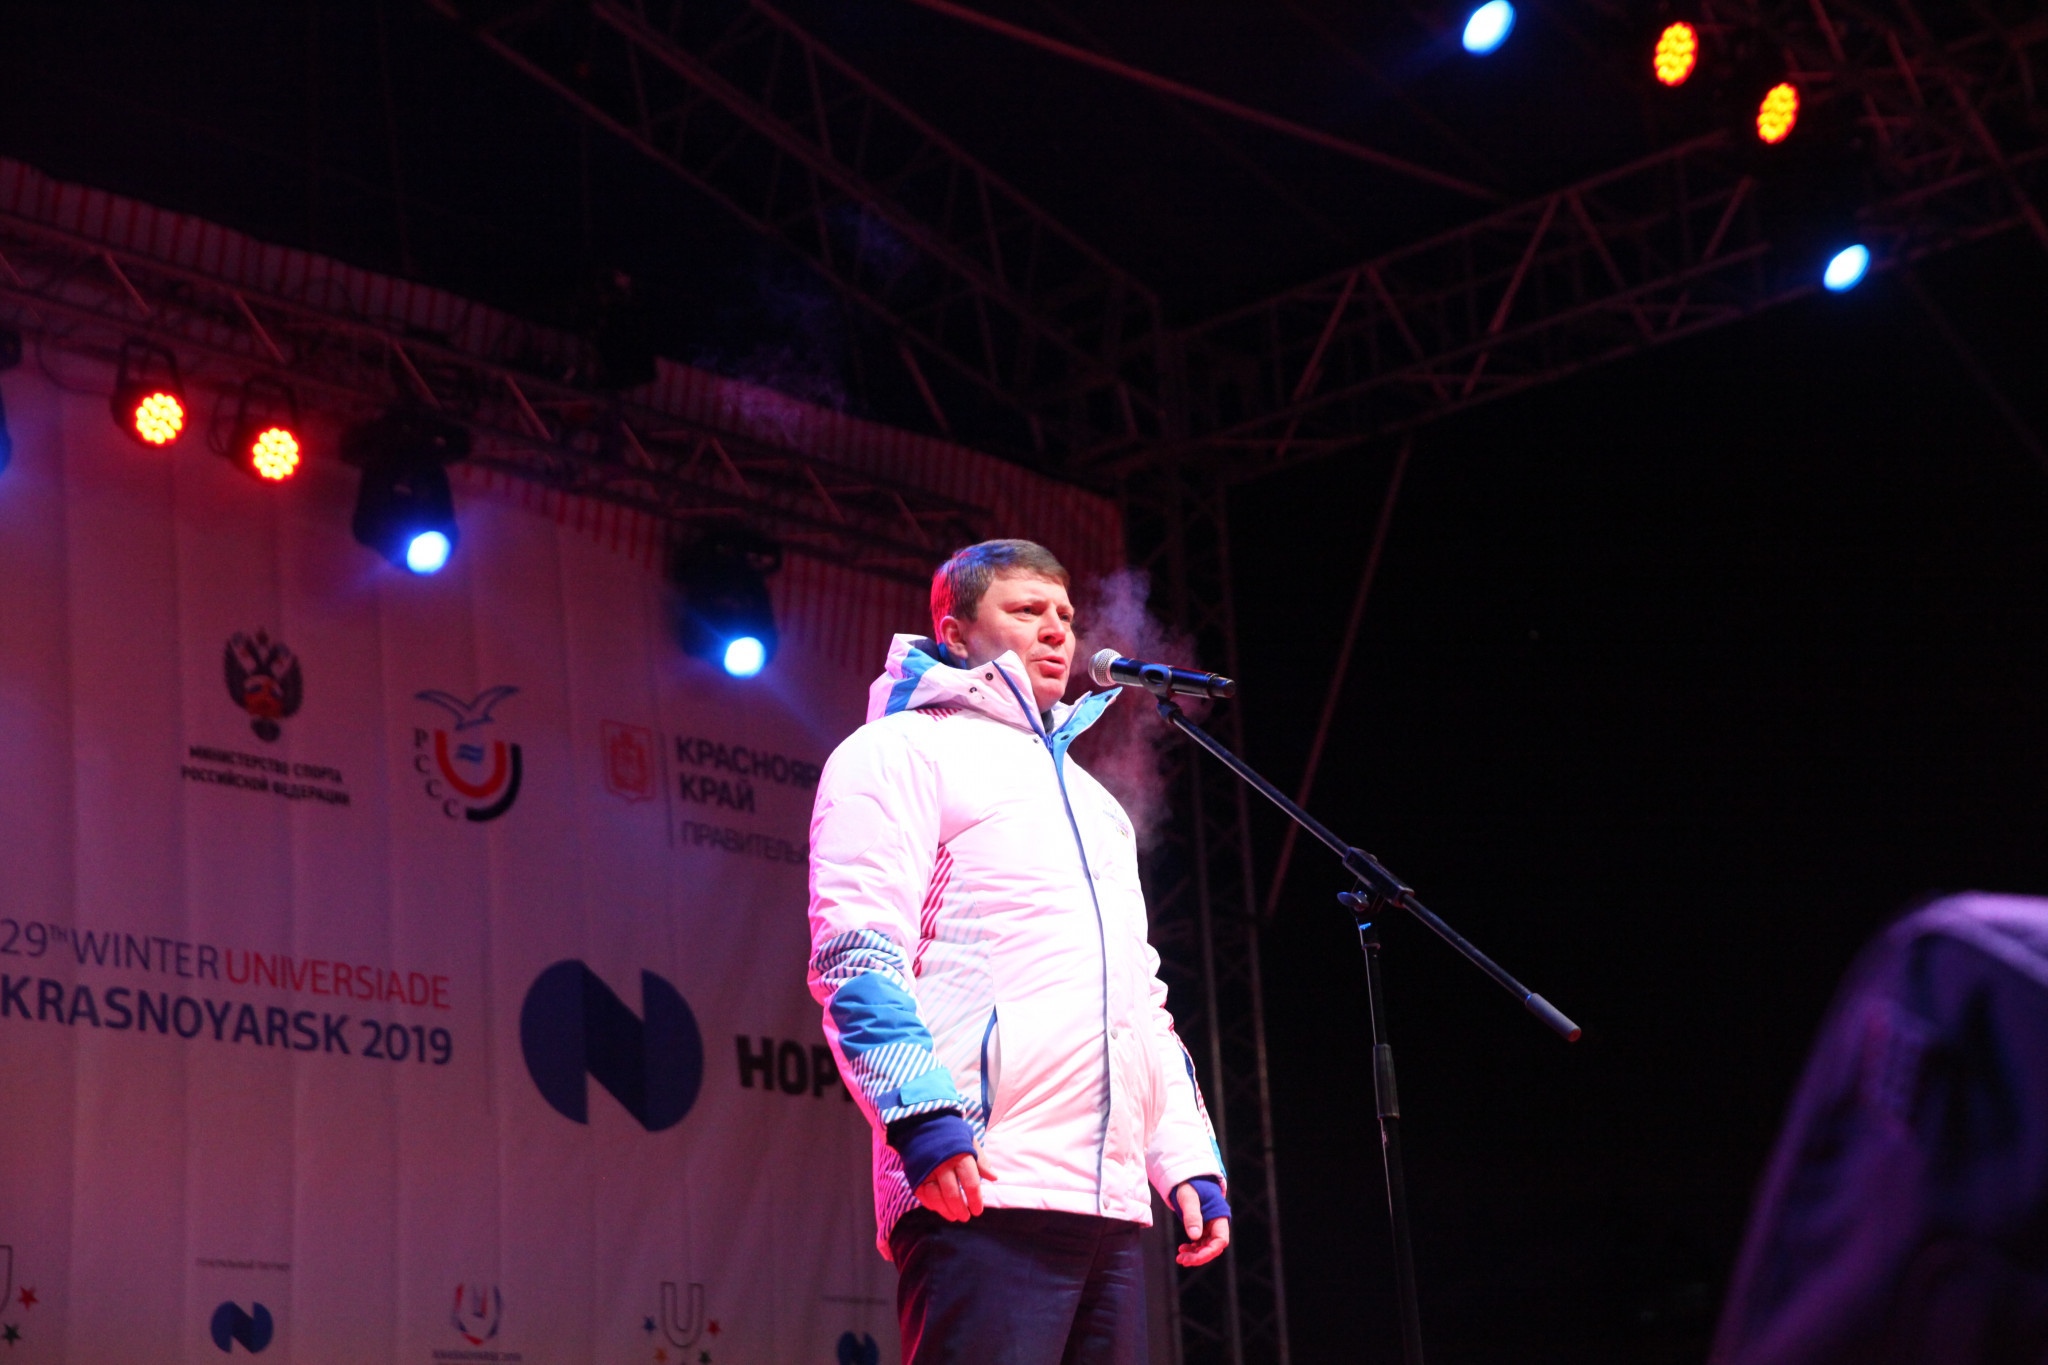 Krasnoyarsk Mayor Sergey Eryomin marked one year to go in a speech at a festival on Theatre Square ©Krasnoyarsk 2019